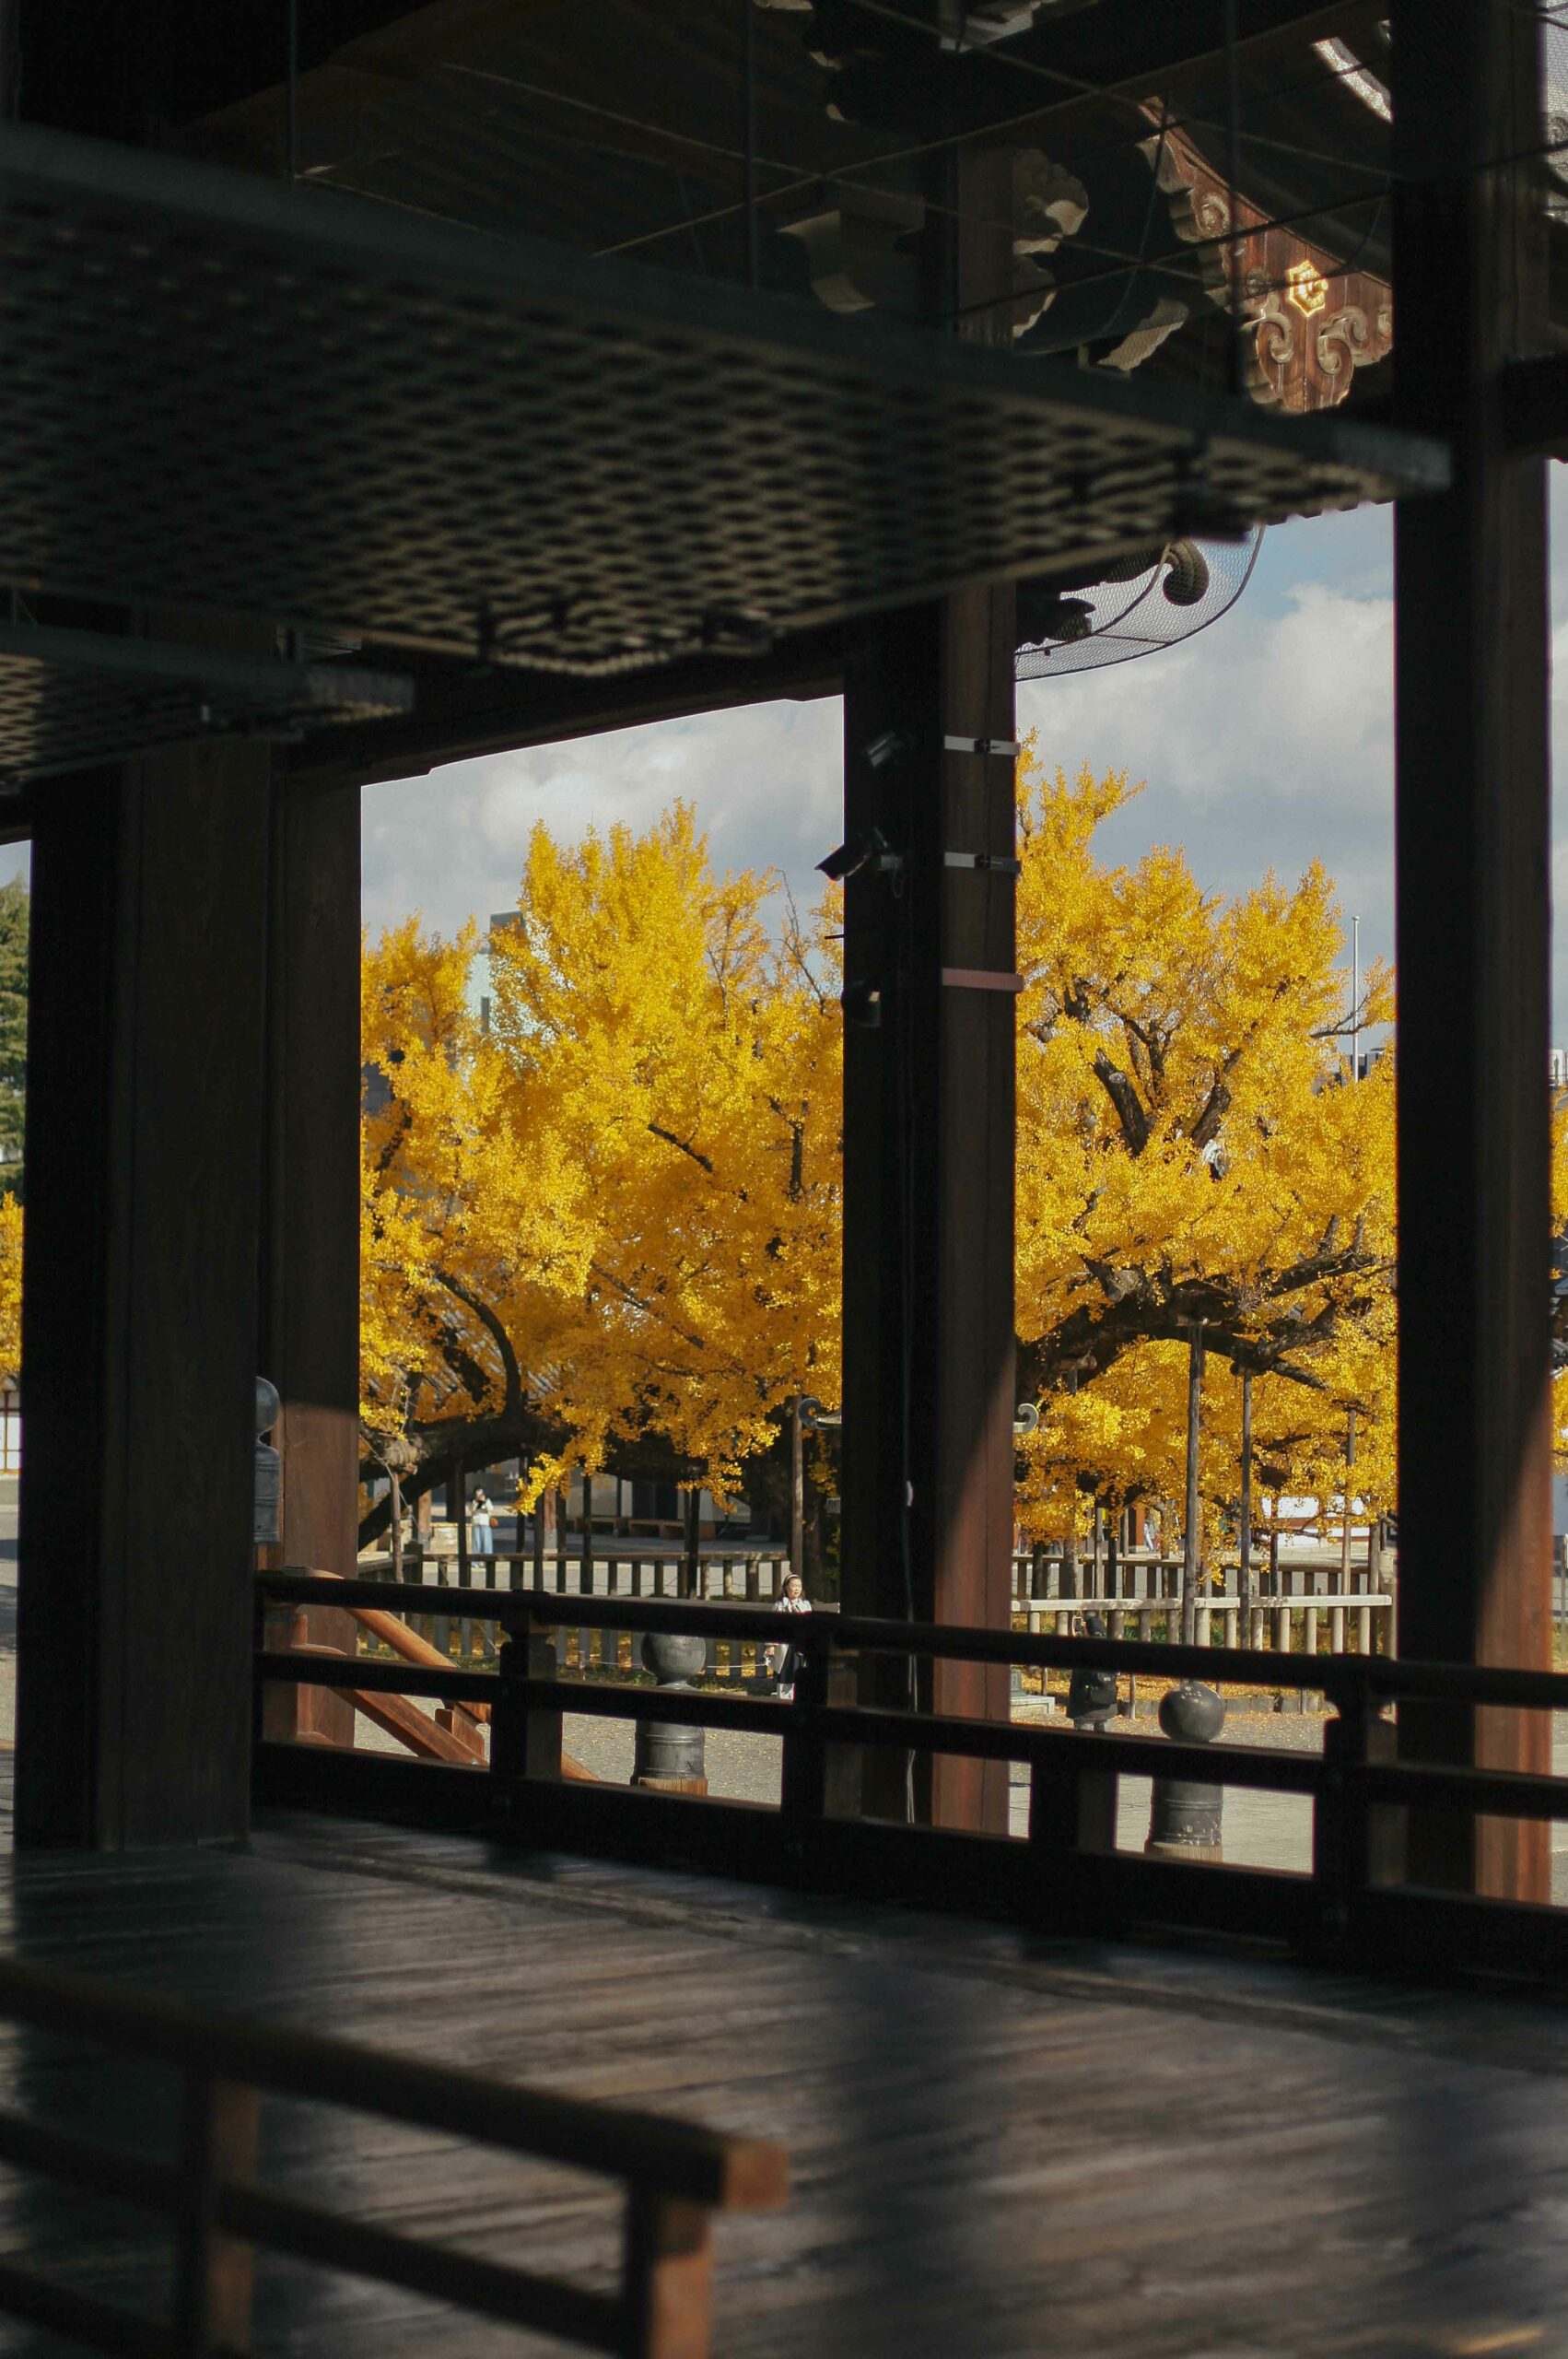 Nishi Hongan-ji is home to an enormous ginkgo tree, which turns an incredible shade of yellow in autumn.